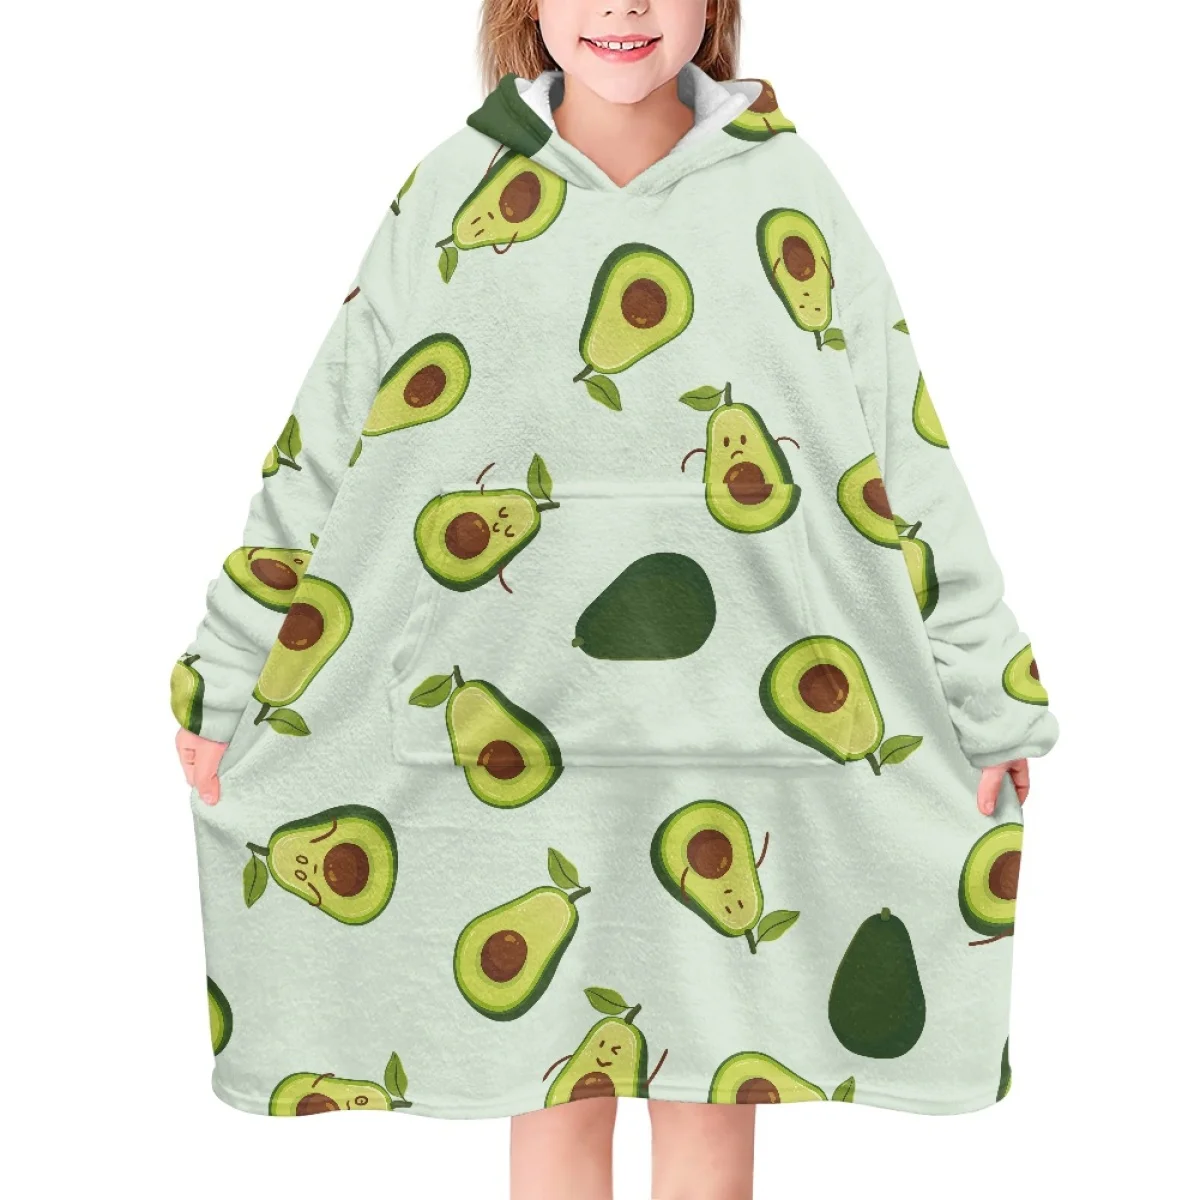 Children's Clothing New Trendy Sweatshirt Cartoon Cute Avocado Pattern Kids Tops Clothing Hoodie Blankets Wearable Home Casual Soft Hoodie Pajamas